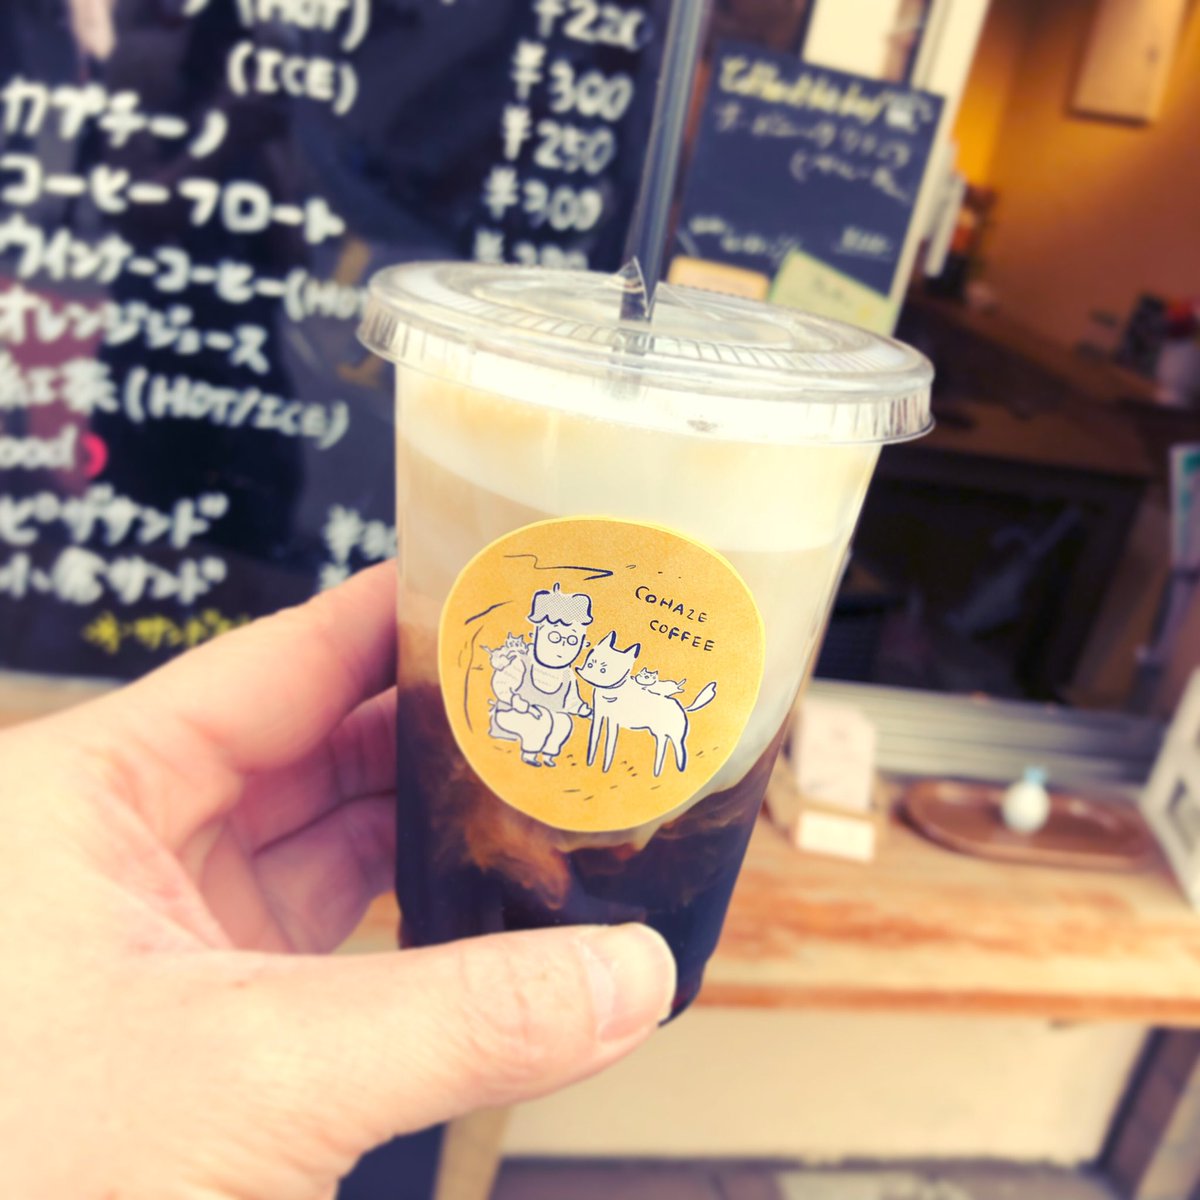 Gekiでも可愛いアイスコーヒーあるよ こはぜ珈琲 下北沢の下北沢一番街商店街にある自家焙煎コーヒー店